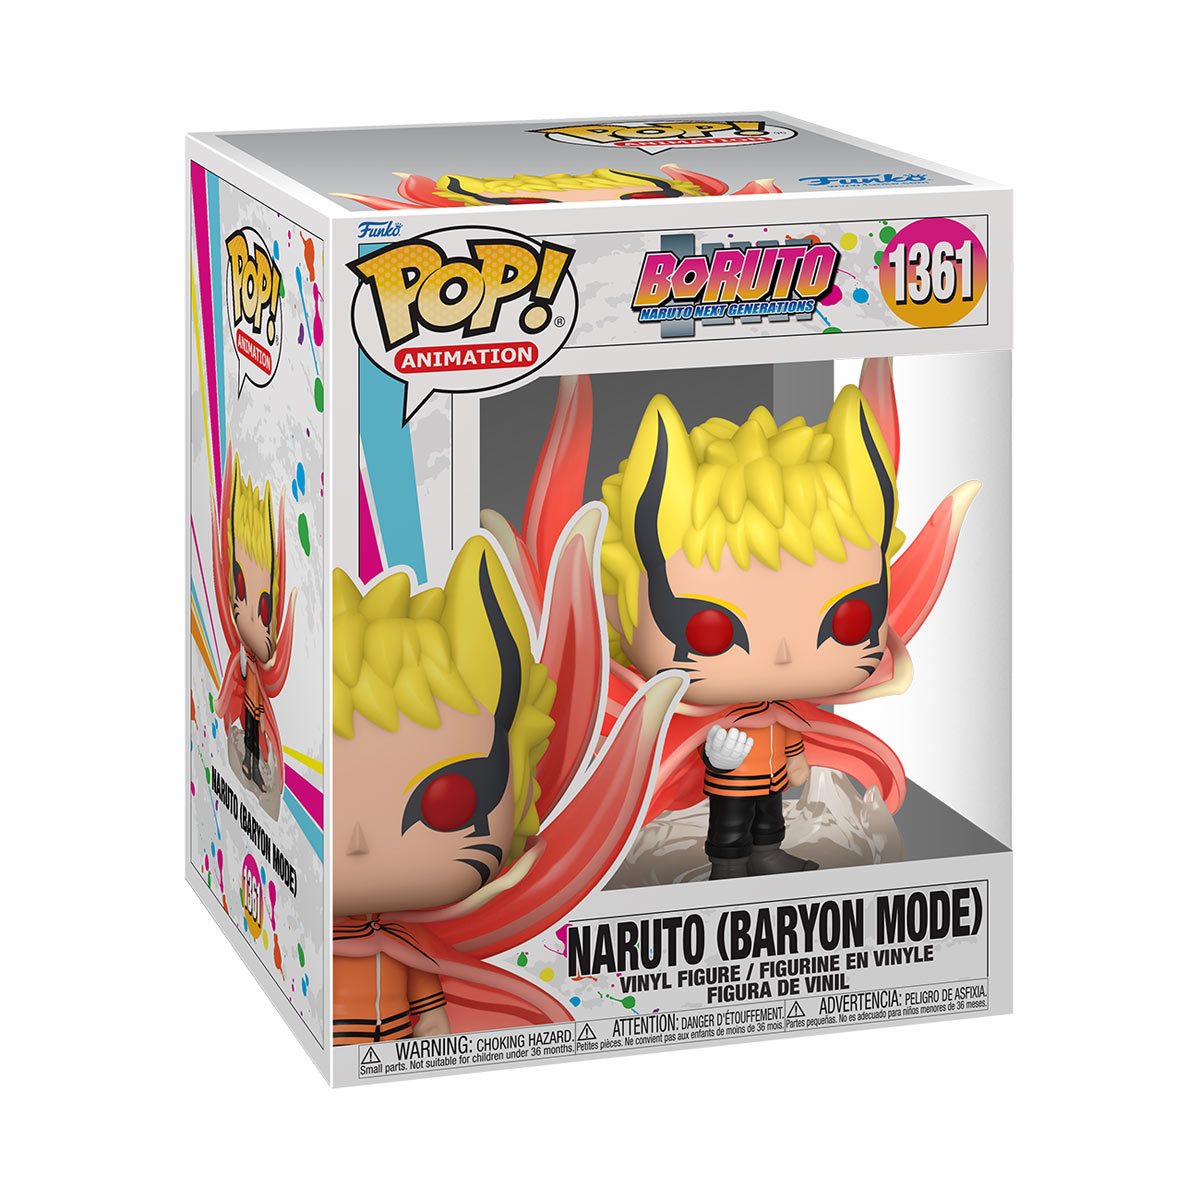 Funko Pop Super: Boruto - Naruto Modo Barion 6 Pulgadas